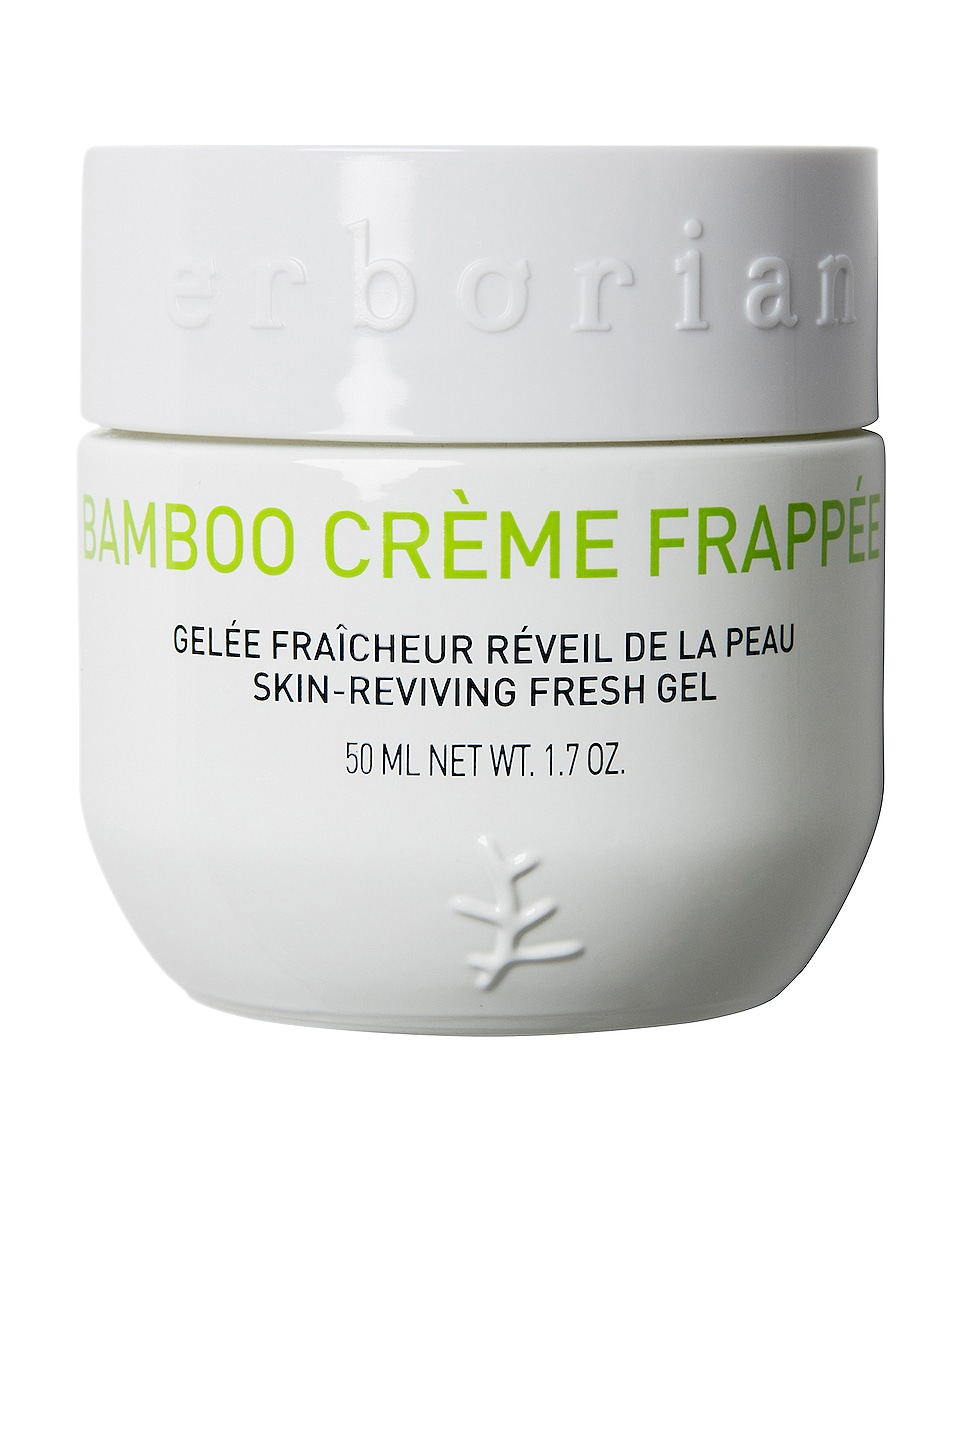 erborian Bamboo Creme Frappee Cream Moisturizer | REVOLVE